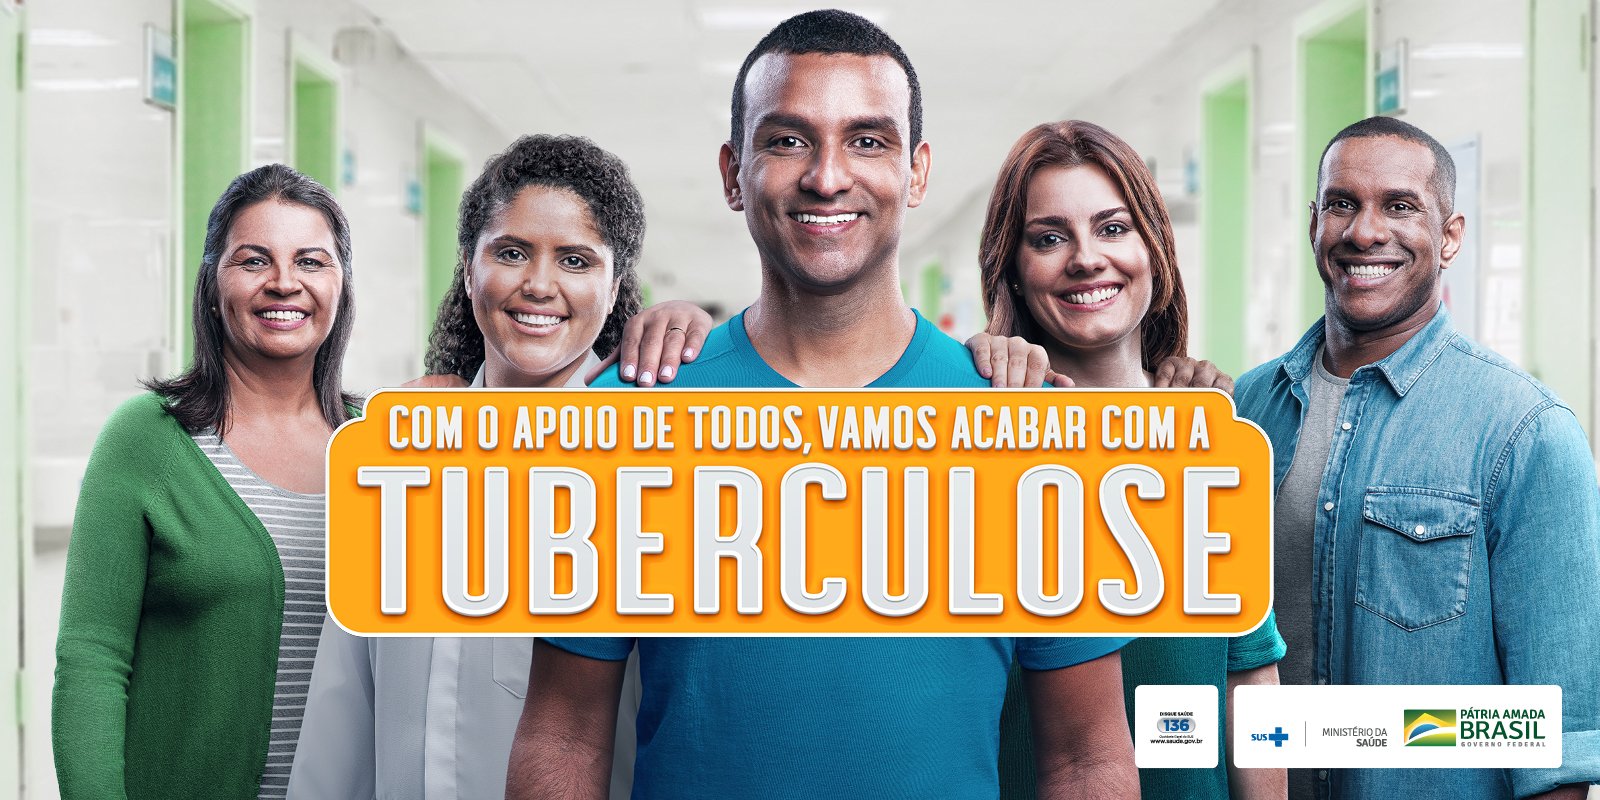 Featured image for “Campanha de Tuberculose 2019”